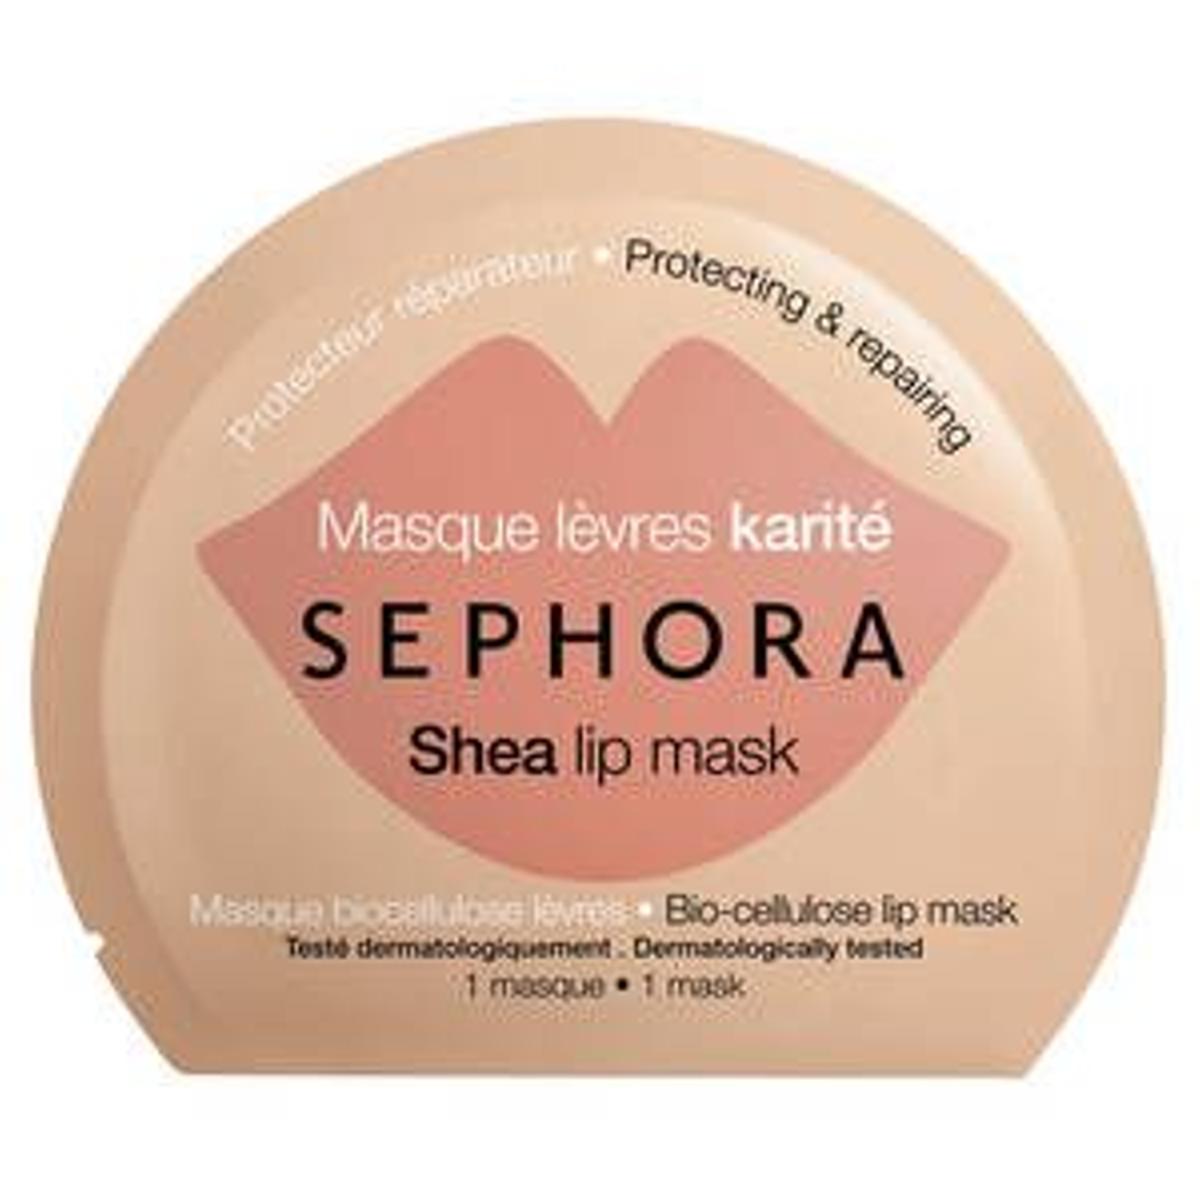 Shea Lip Mask, Sephora